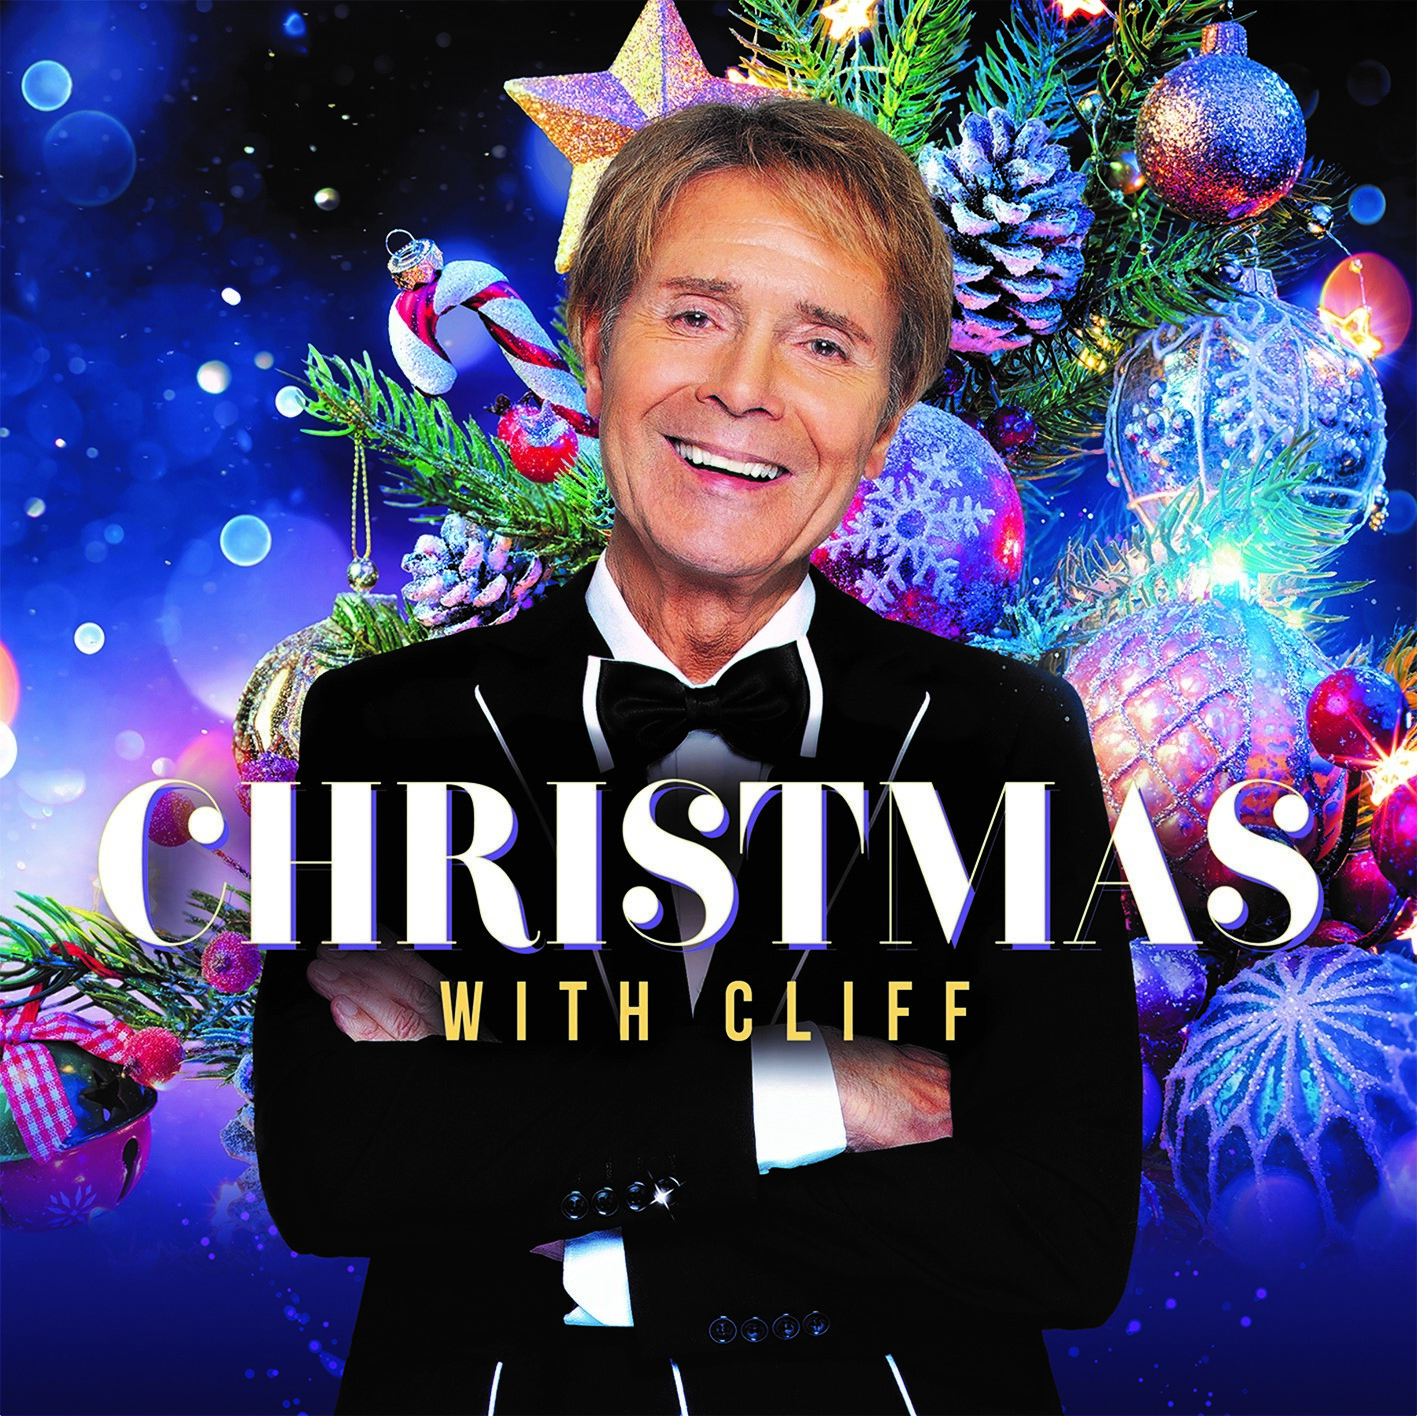 Sir Cliff Richard announces ‘Christmas With Cliff’